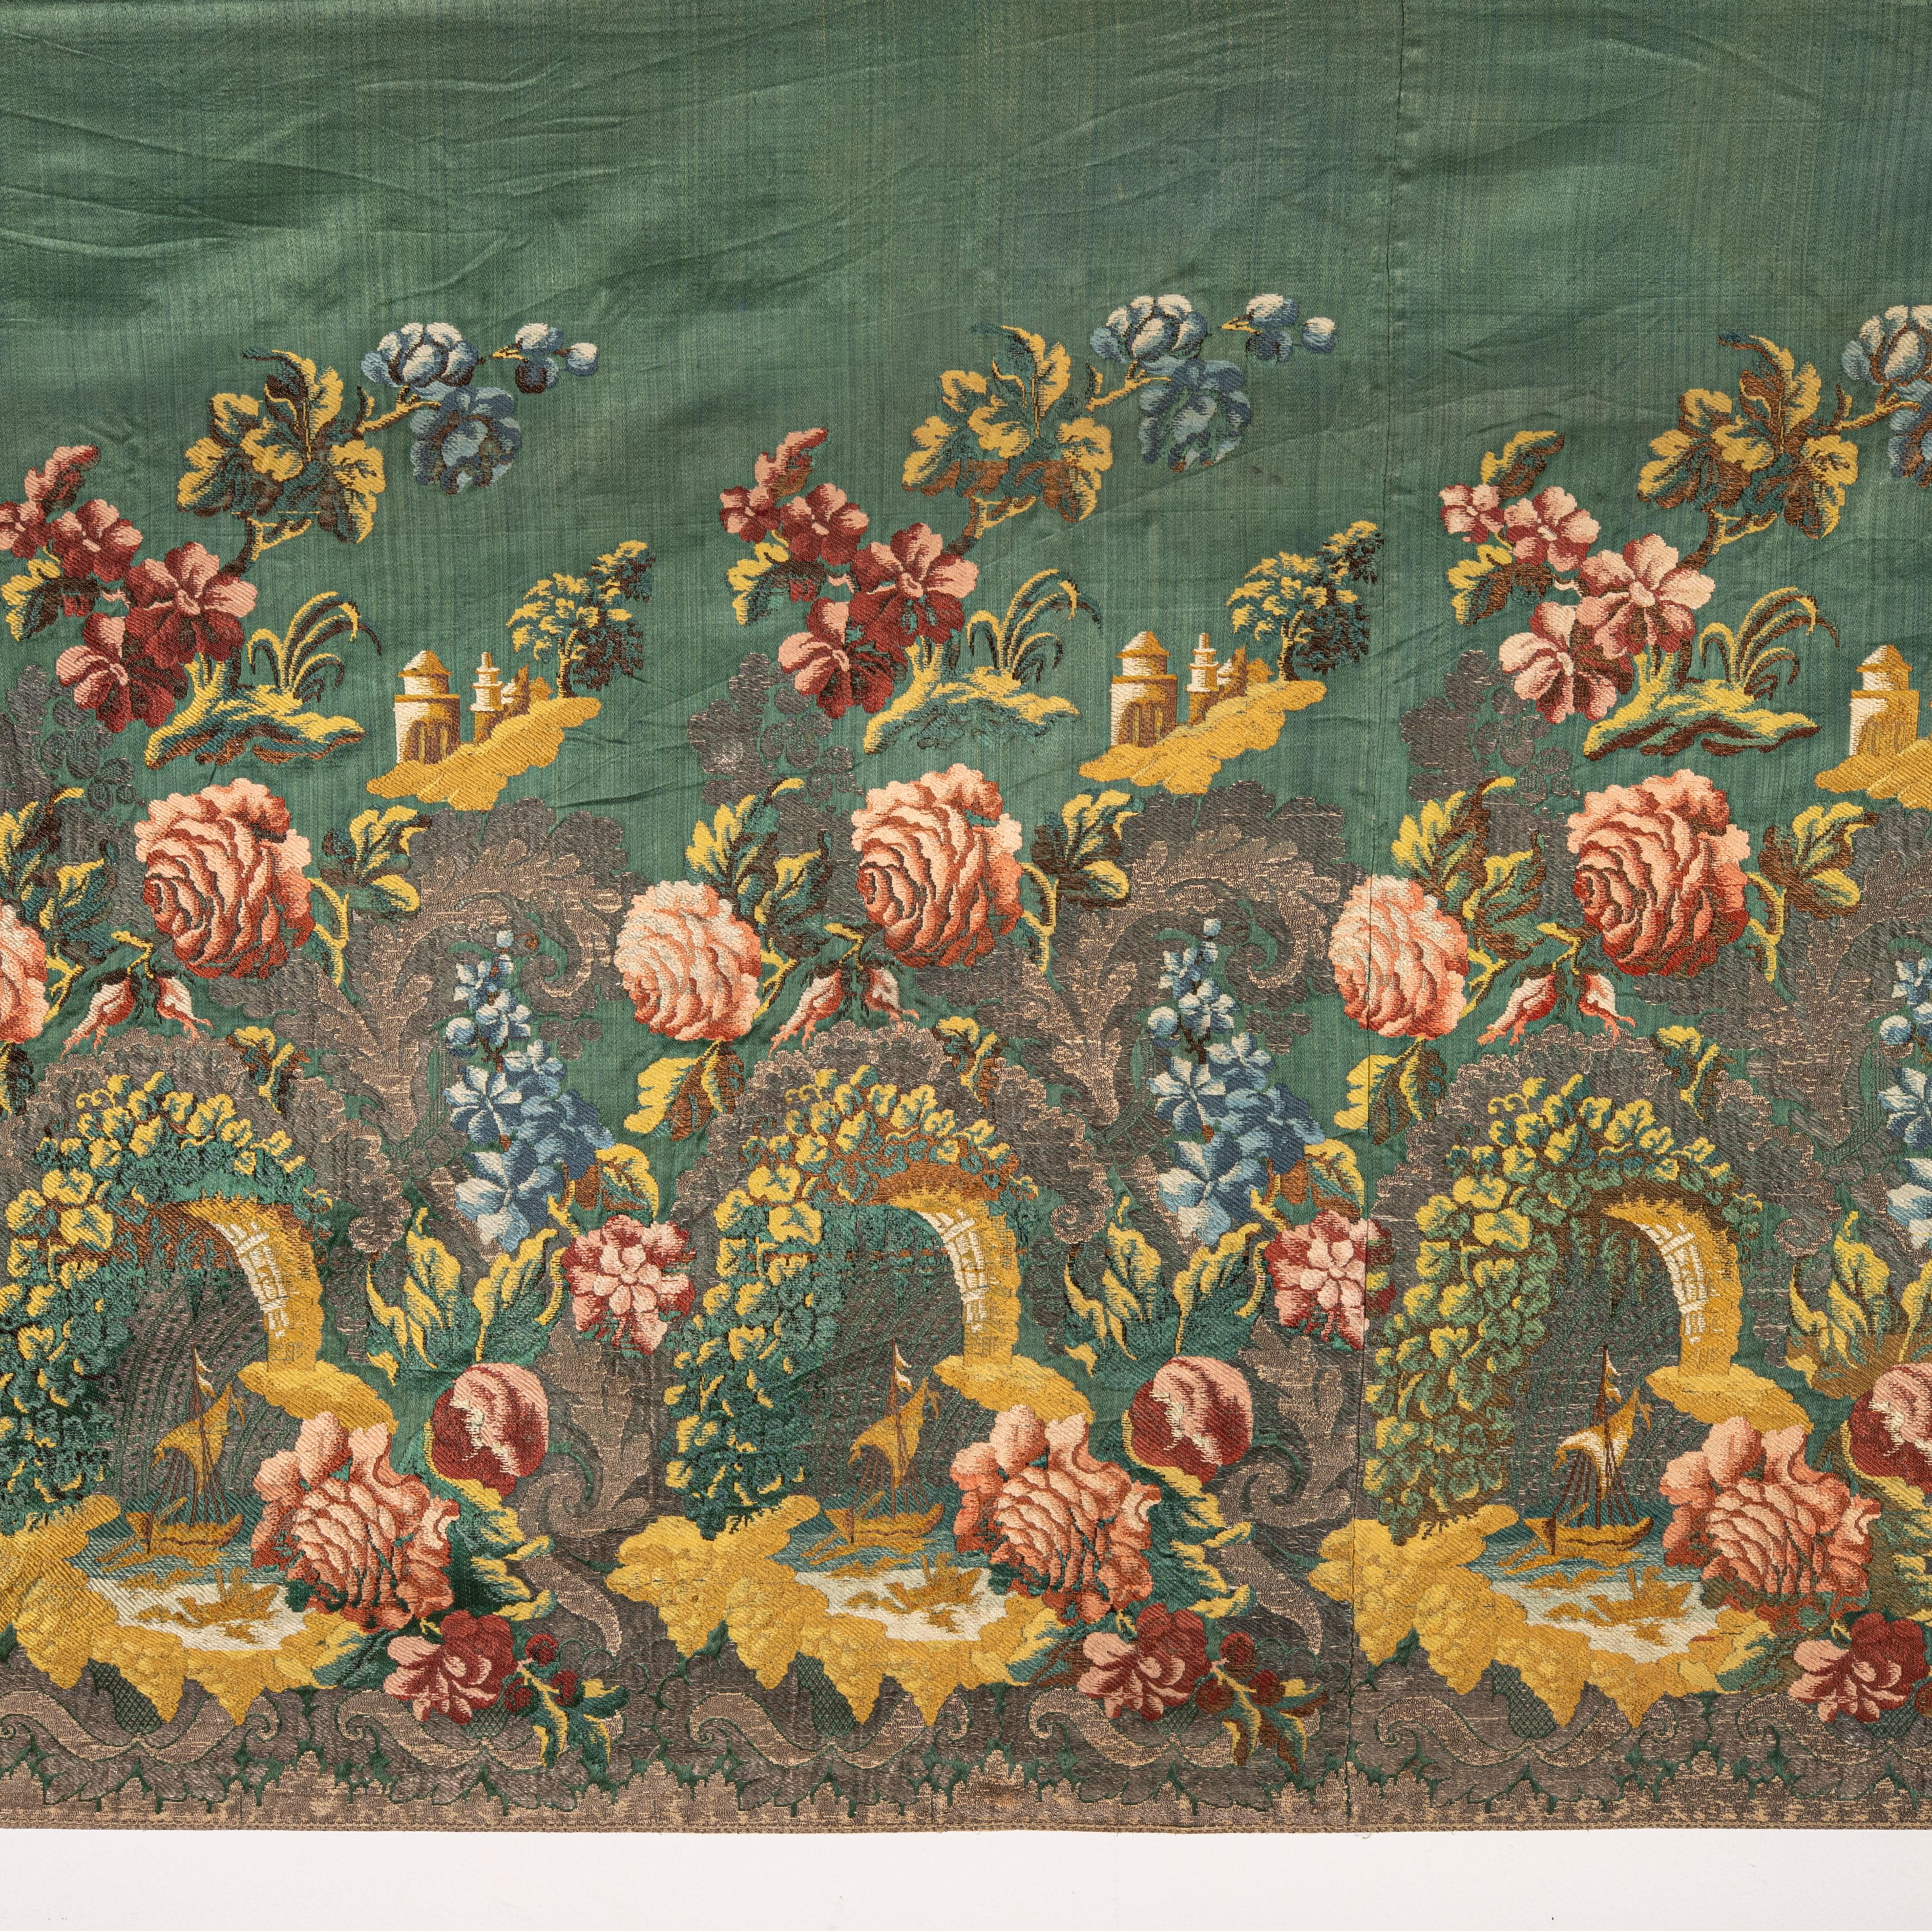 Woven European Silk and Metallic Thread Brocaded Textile, 18th C. For Sale